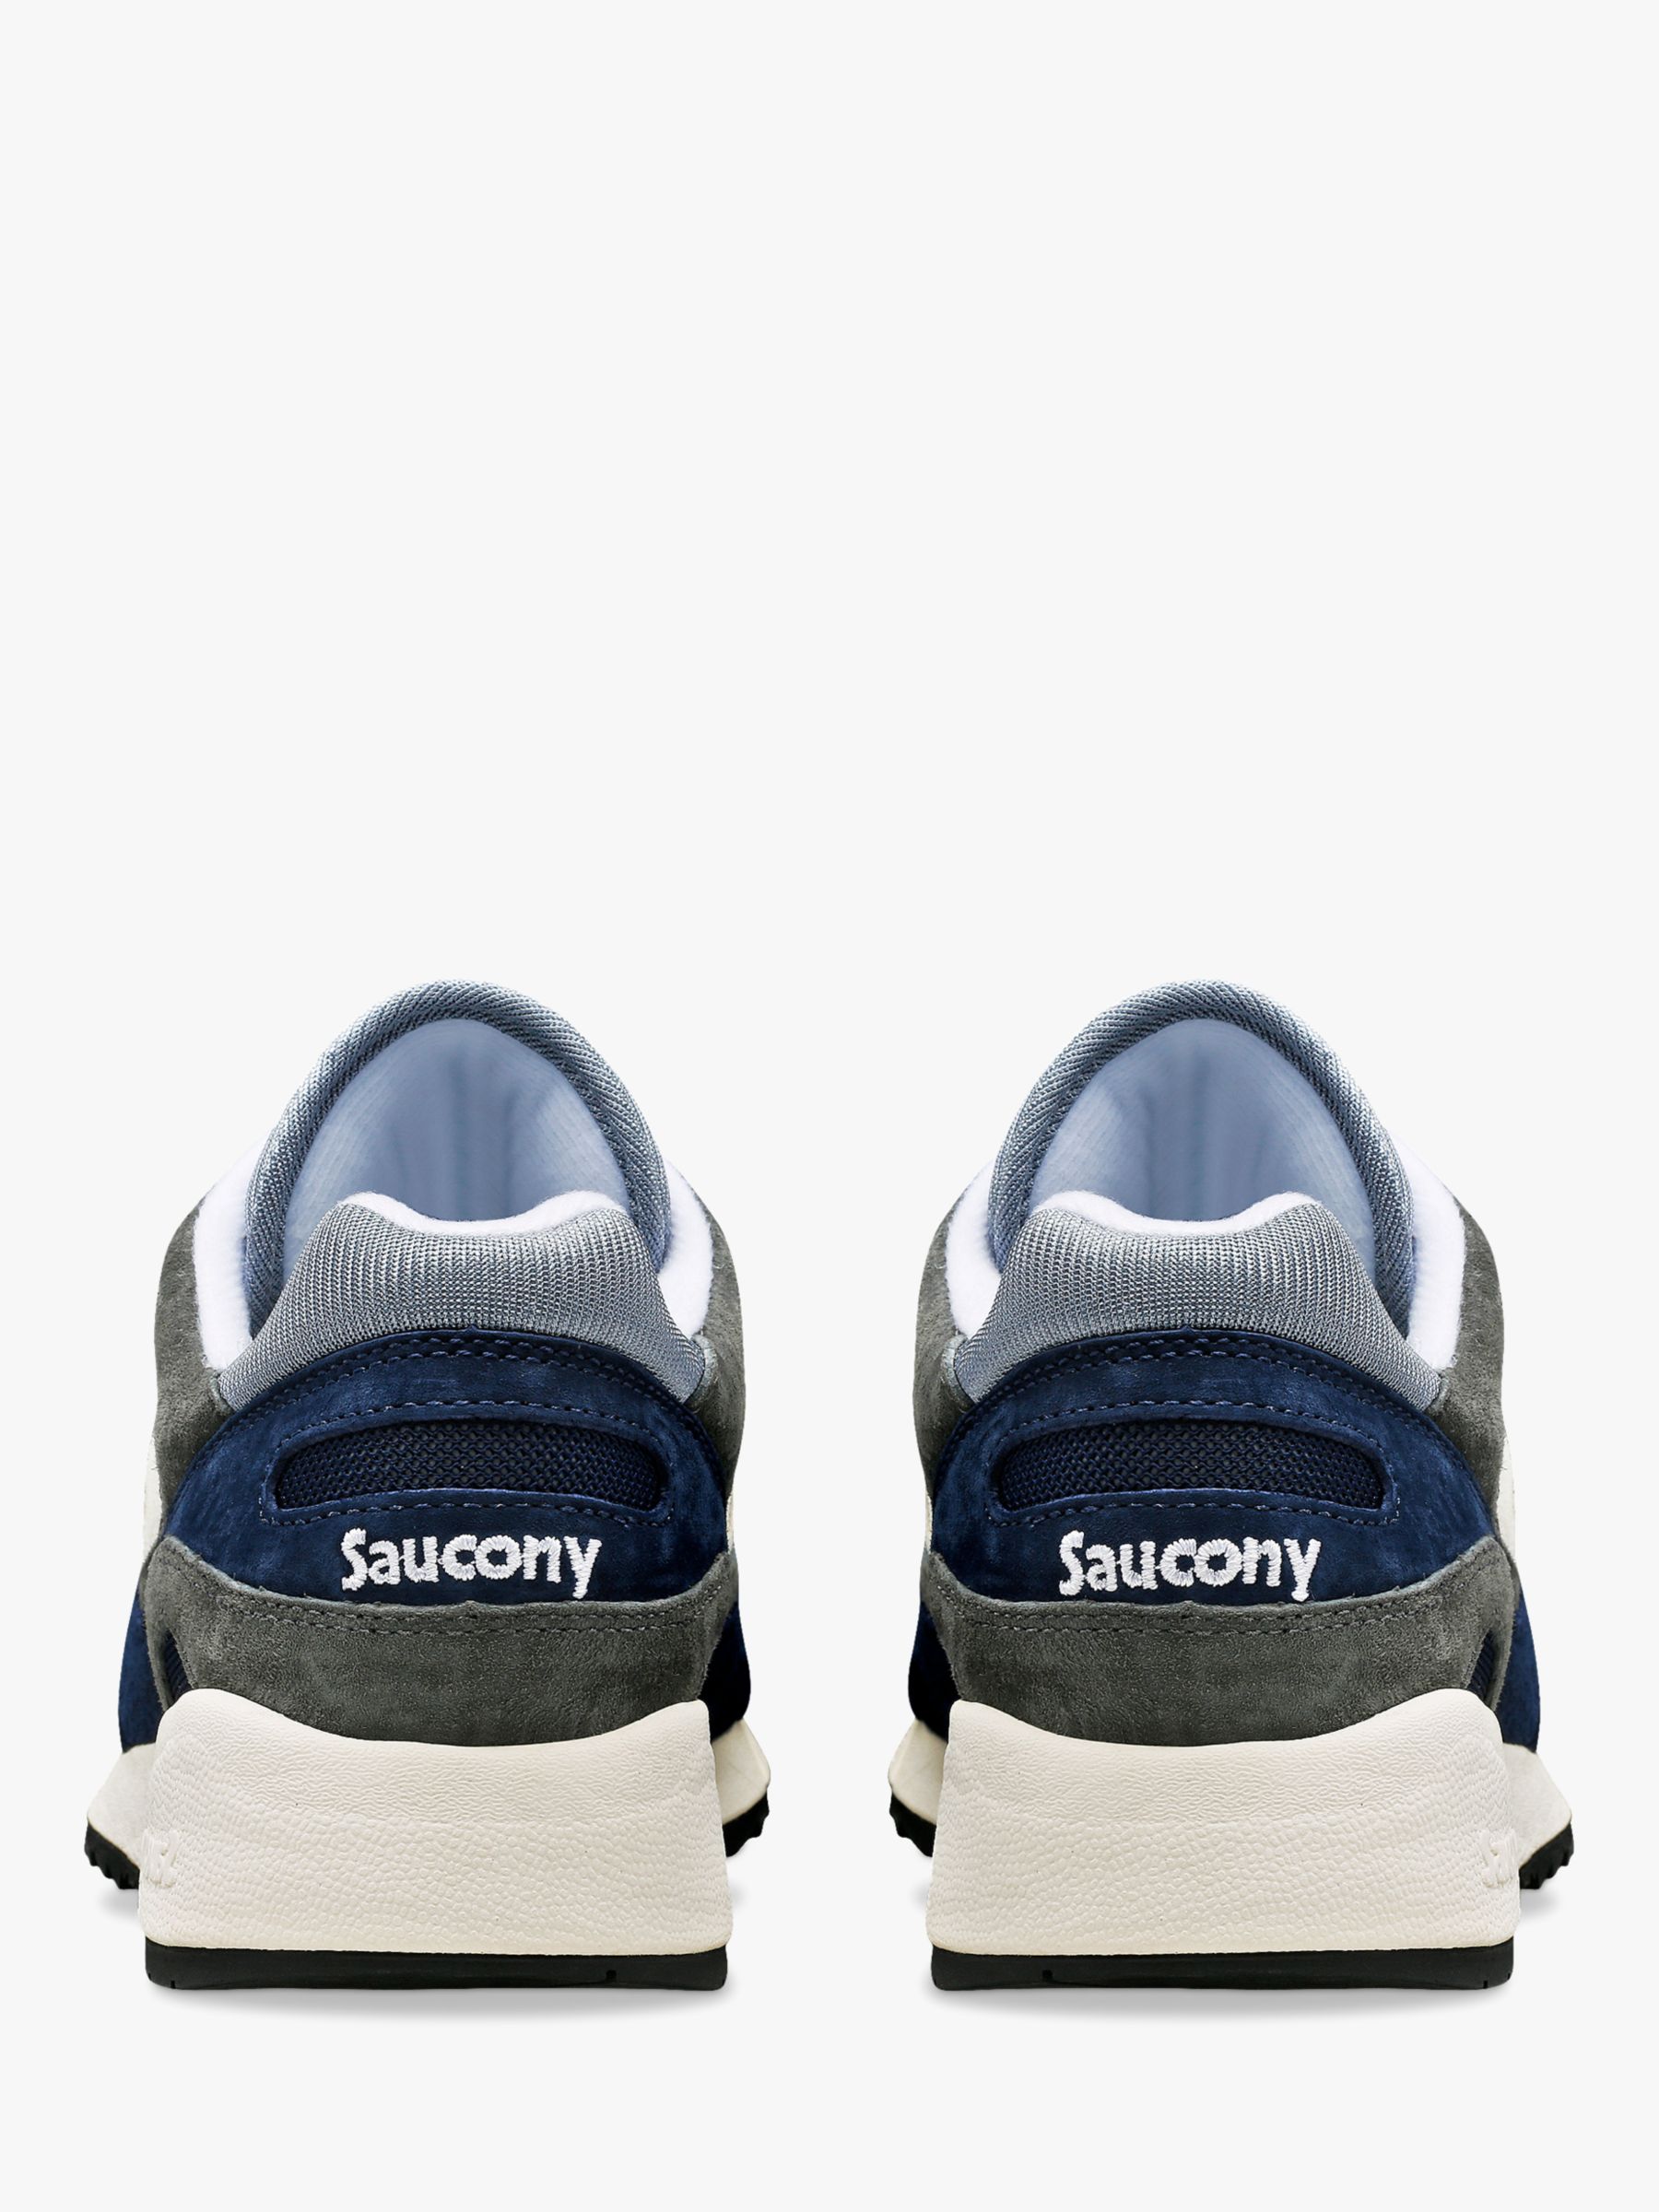 Saucony Shadow 6000 Trainers, Grey/Navy, 8